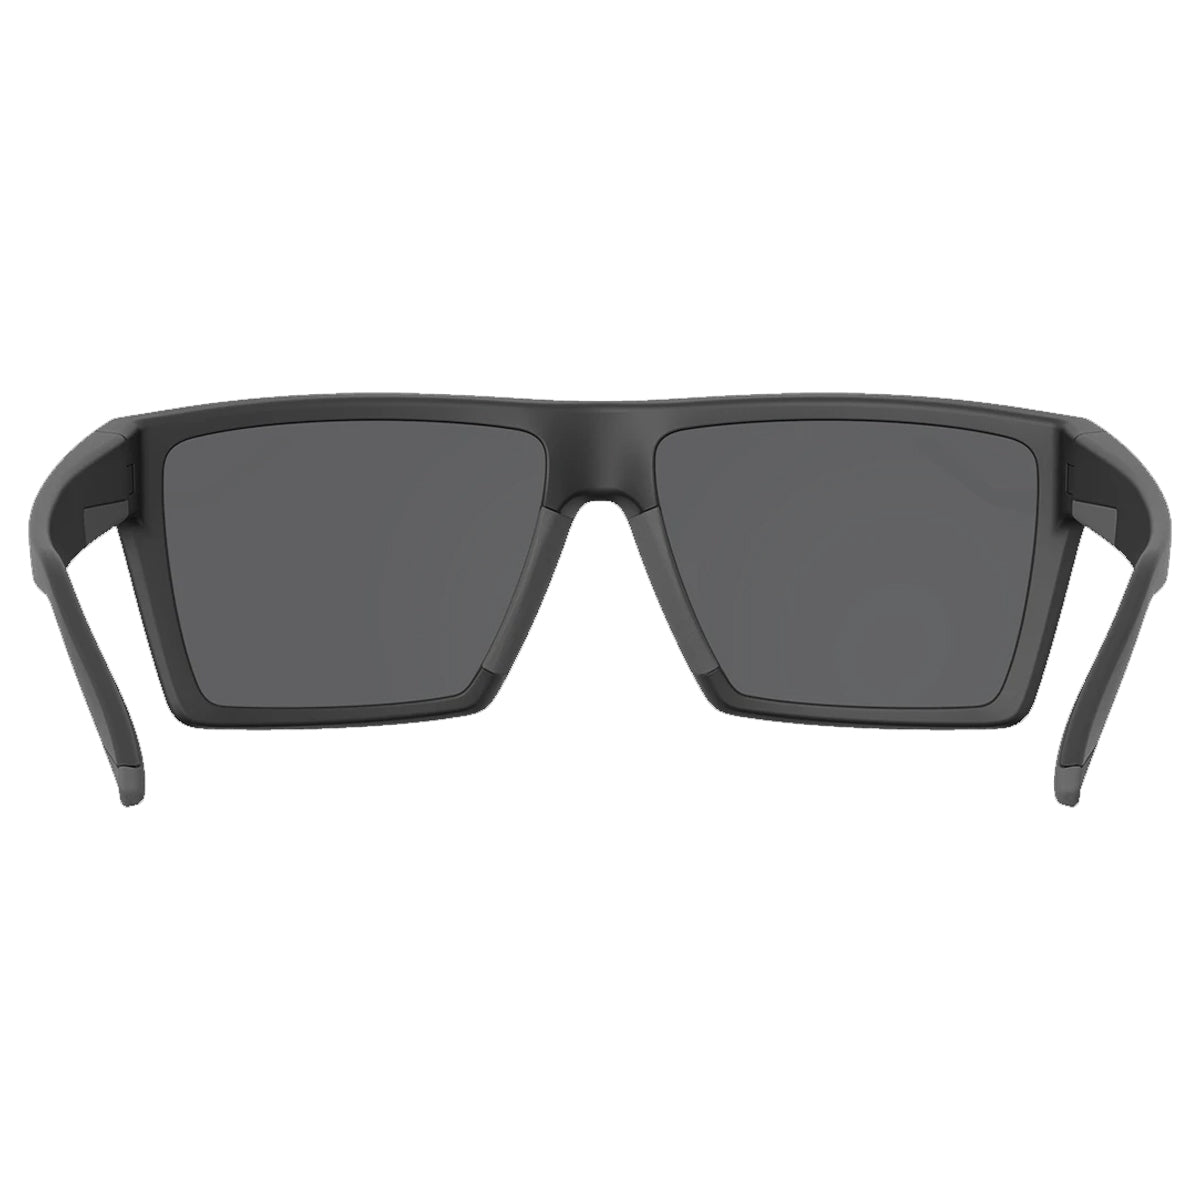 Leupold Refuge Sunglasses in  by GOHUNT | Leupold - GOHUNT Shop